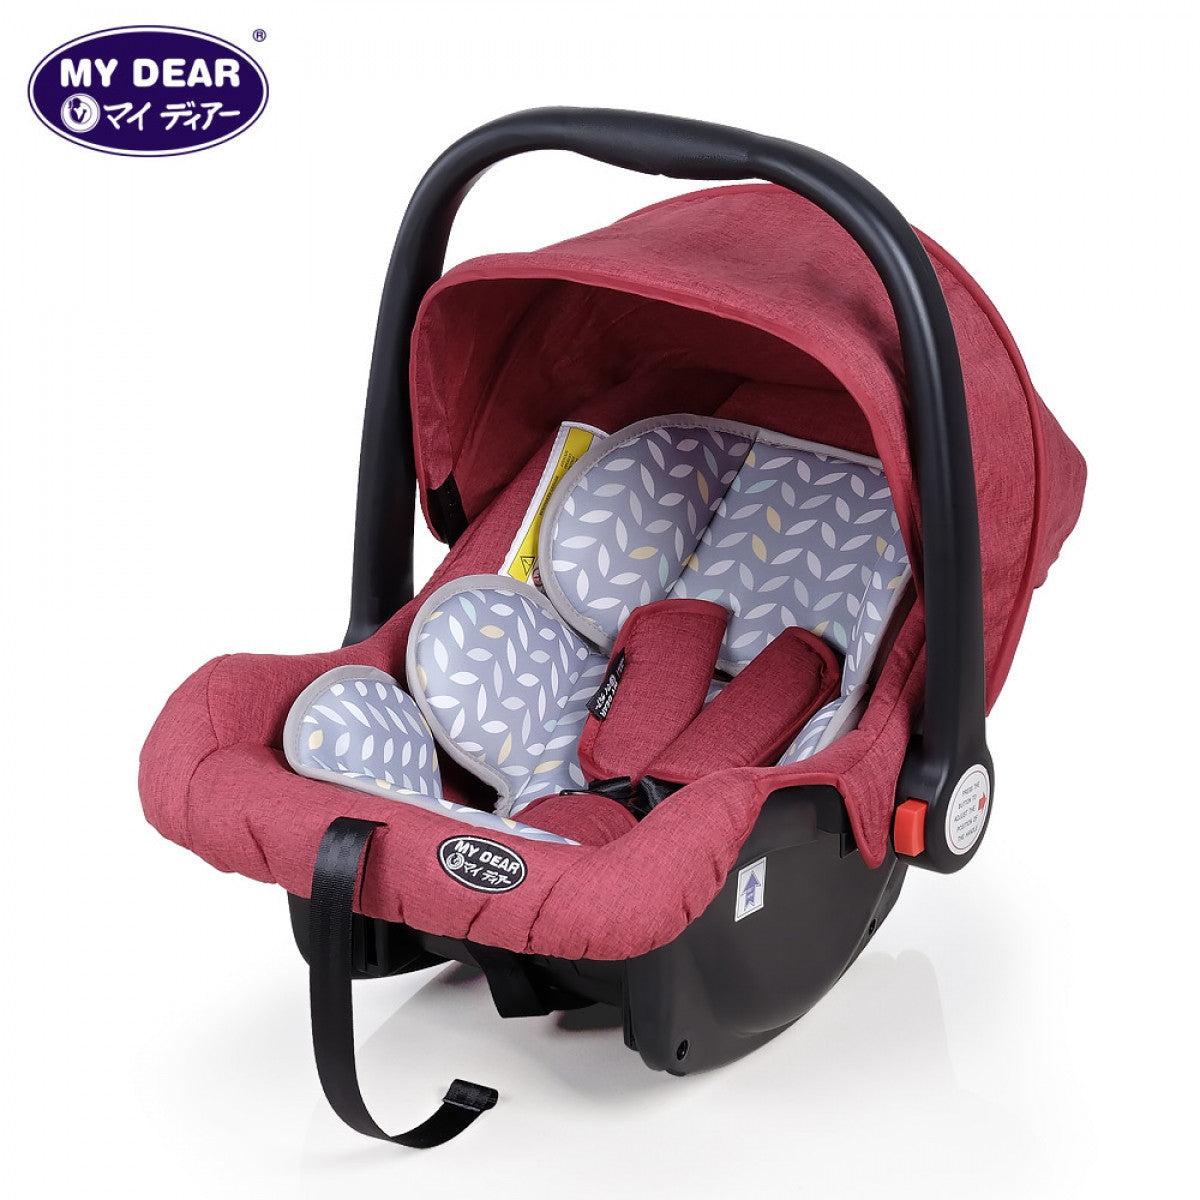 My Dear Infant Baby Carrier / Infant Car Seat 28030